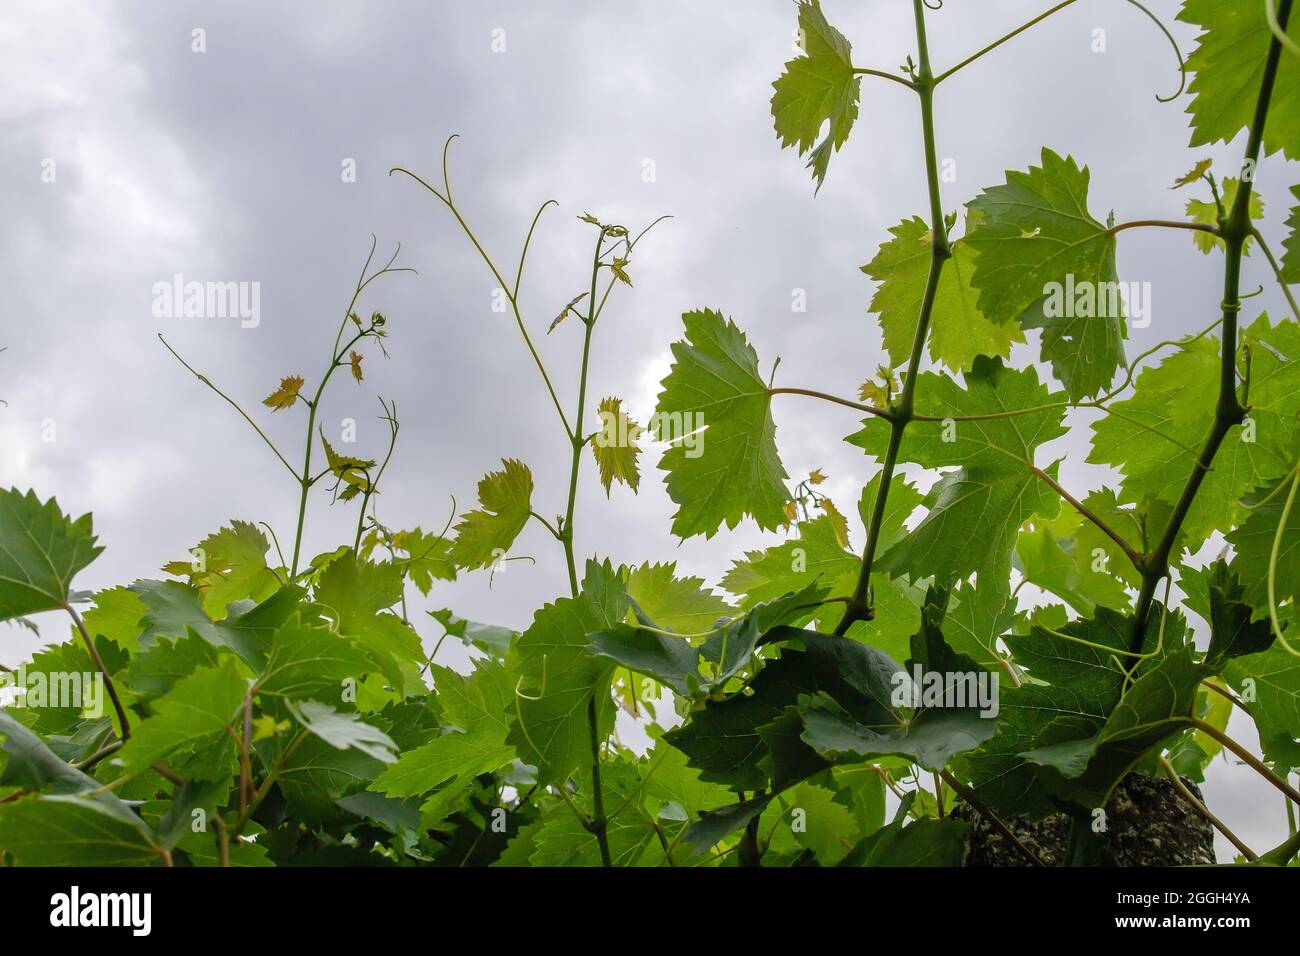 Vitis vinifera grape vines cultivated in making farm vineyard green foliage Stock Photo